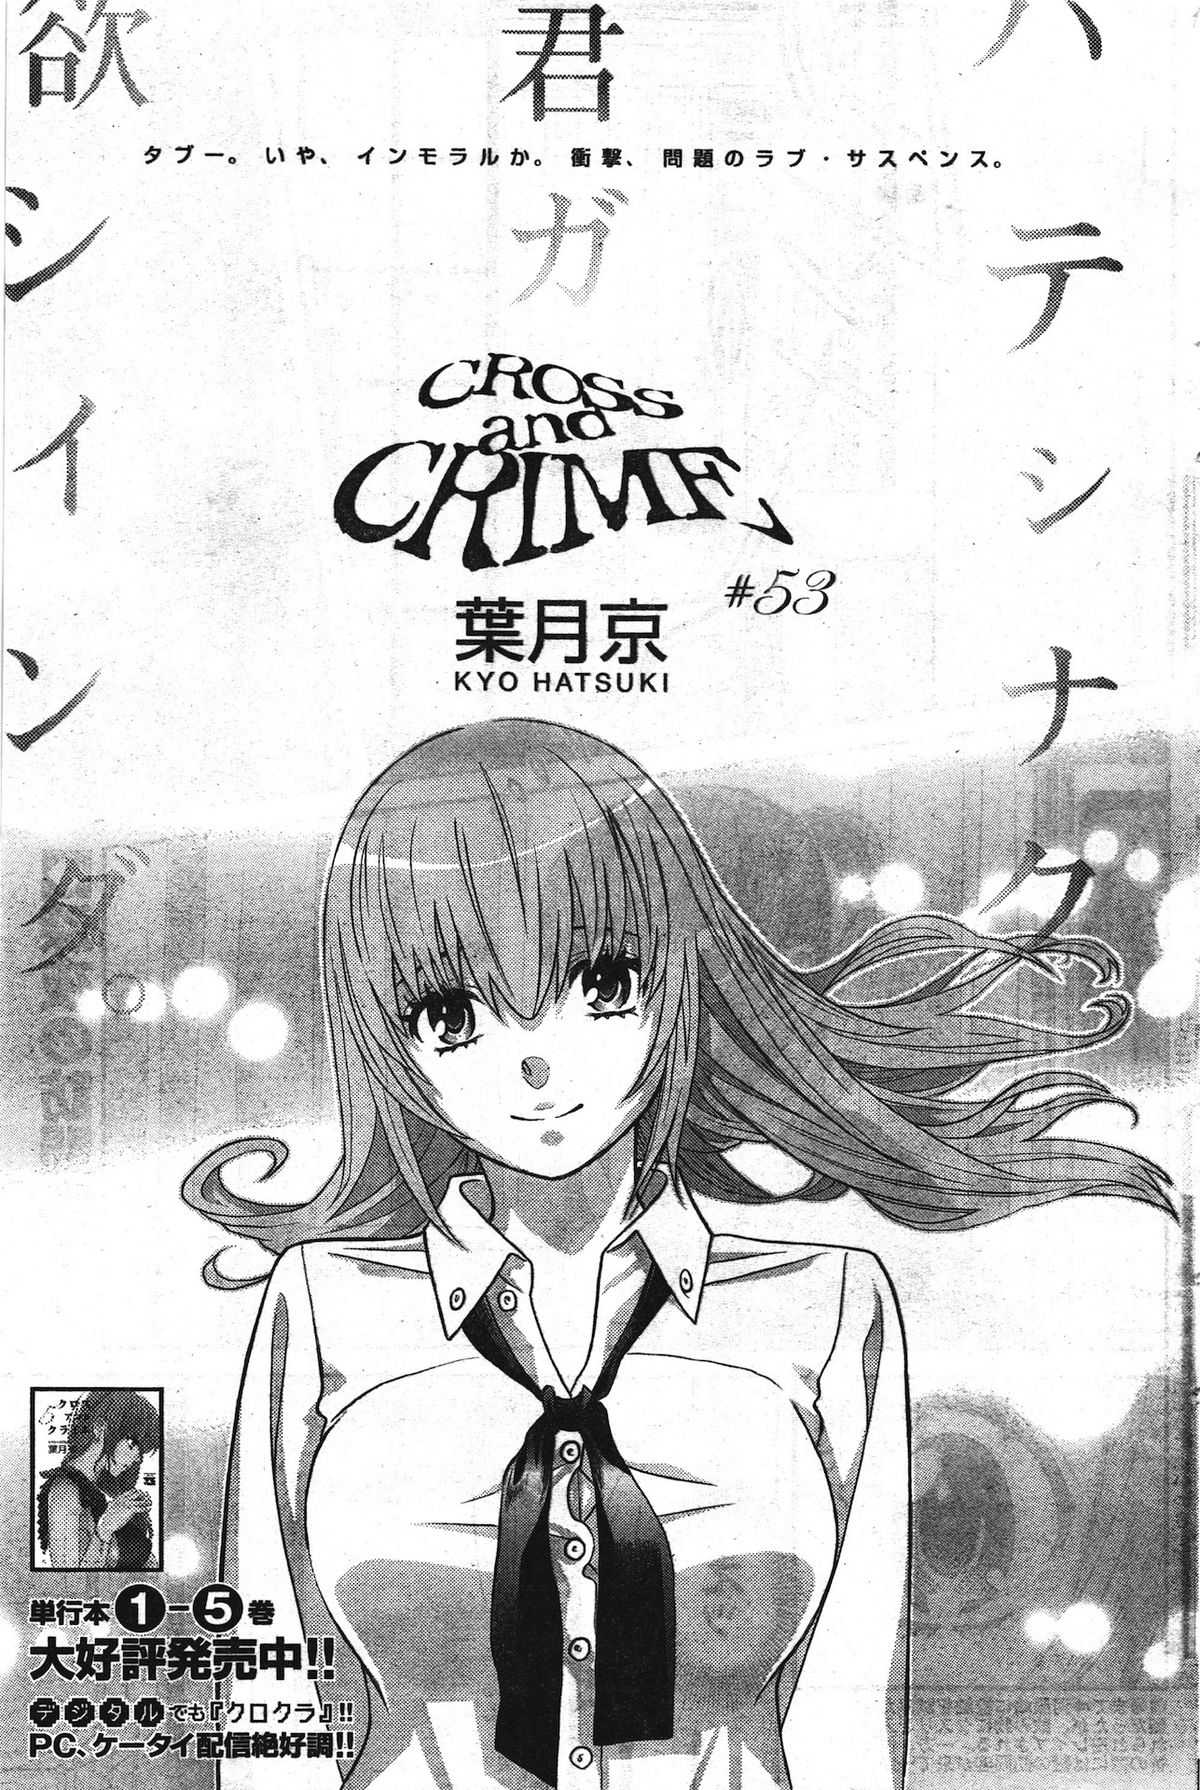 [Hatsuki Kyo] Cross and Crime Ch 53 [JPN] 